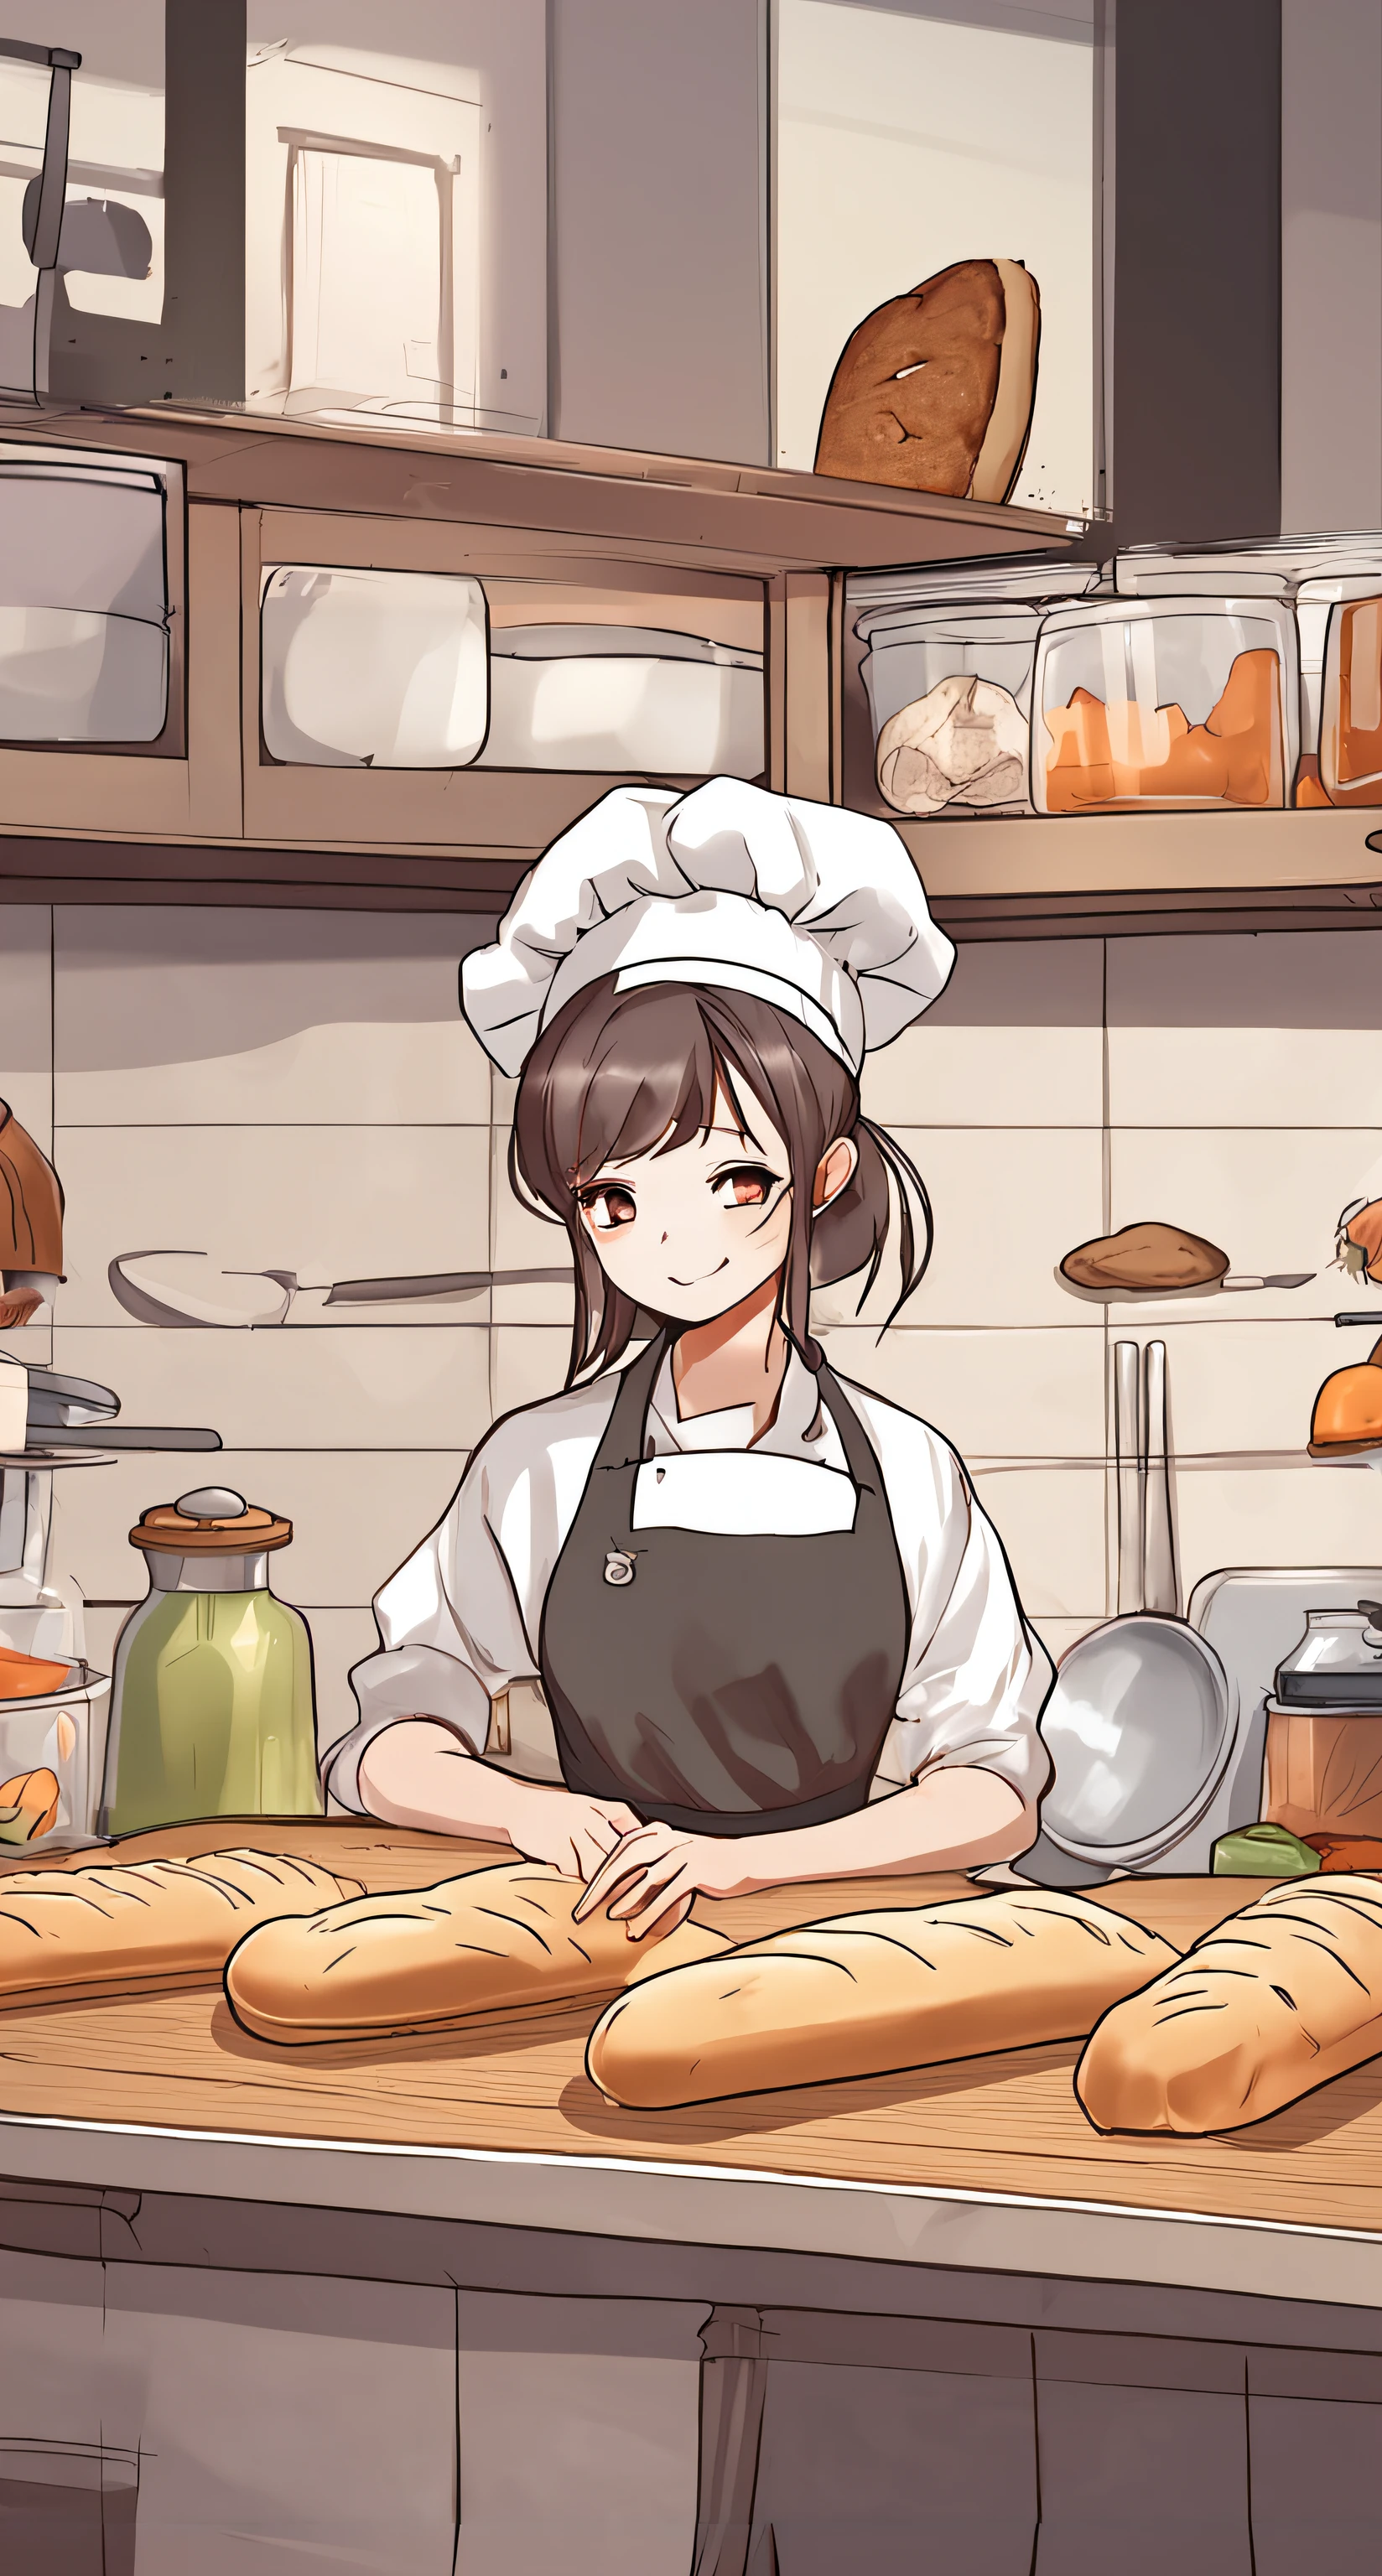 Enchanting Anime Bakery Girl - HD Wallpaper by robokoboto